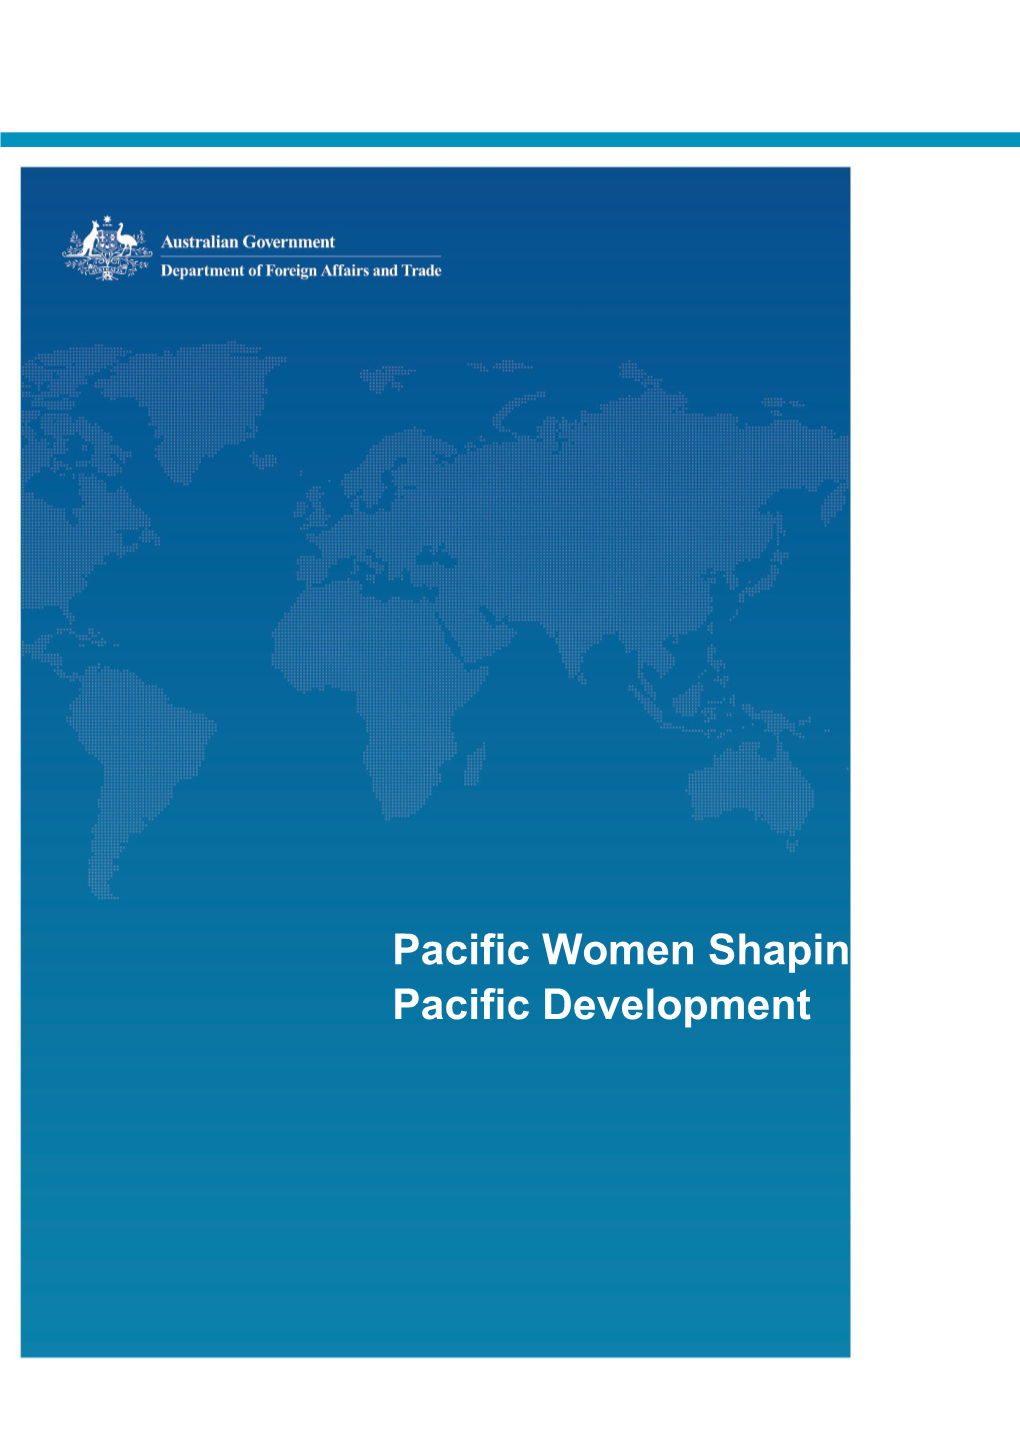 Pacific Women Shaping Pacific Development: Tonga Country Plan Summary